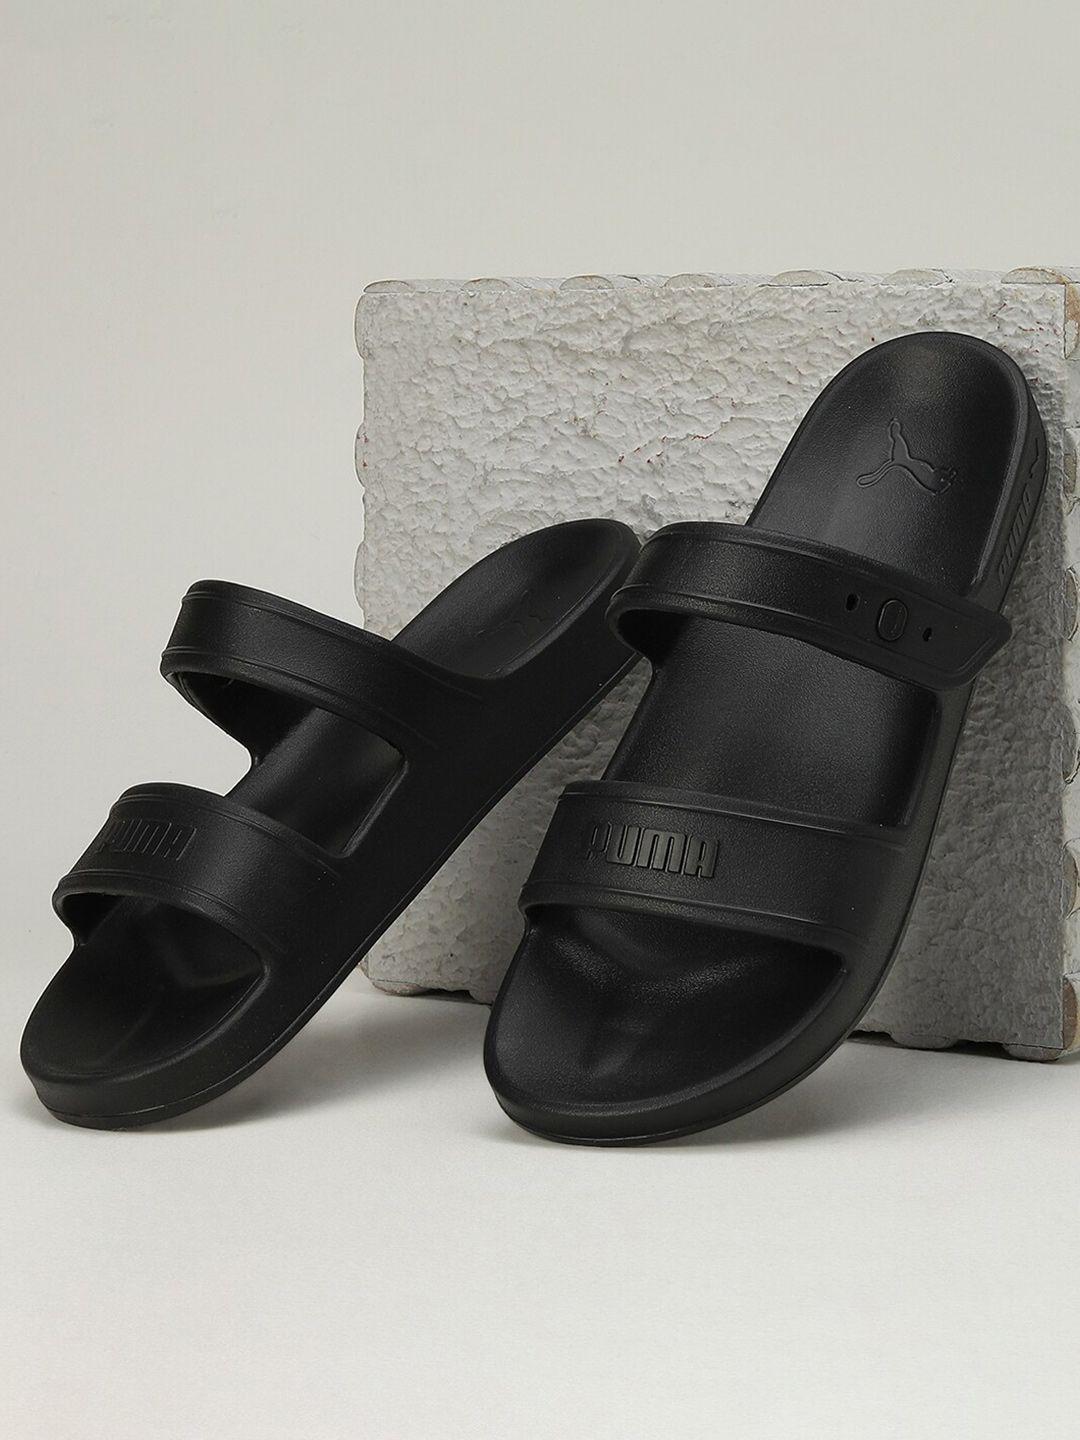 puma coscon slip-on comfort sandals